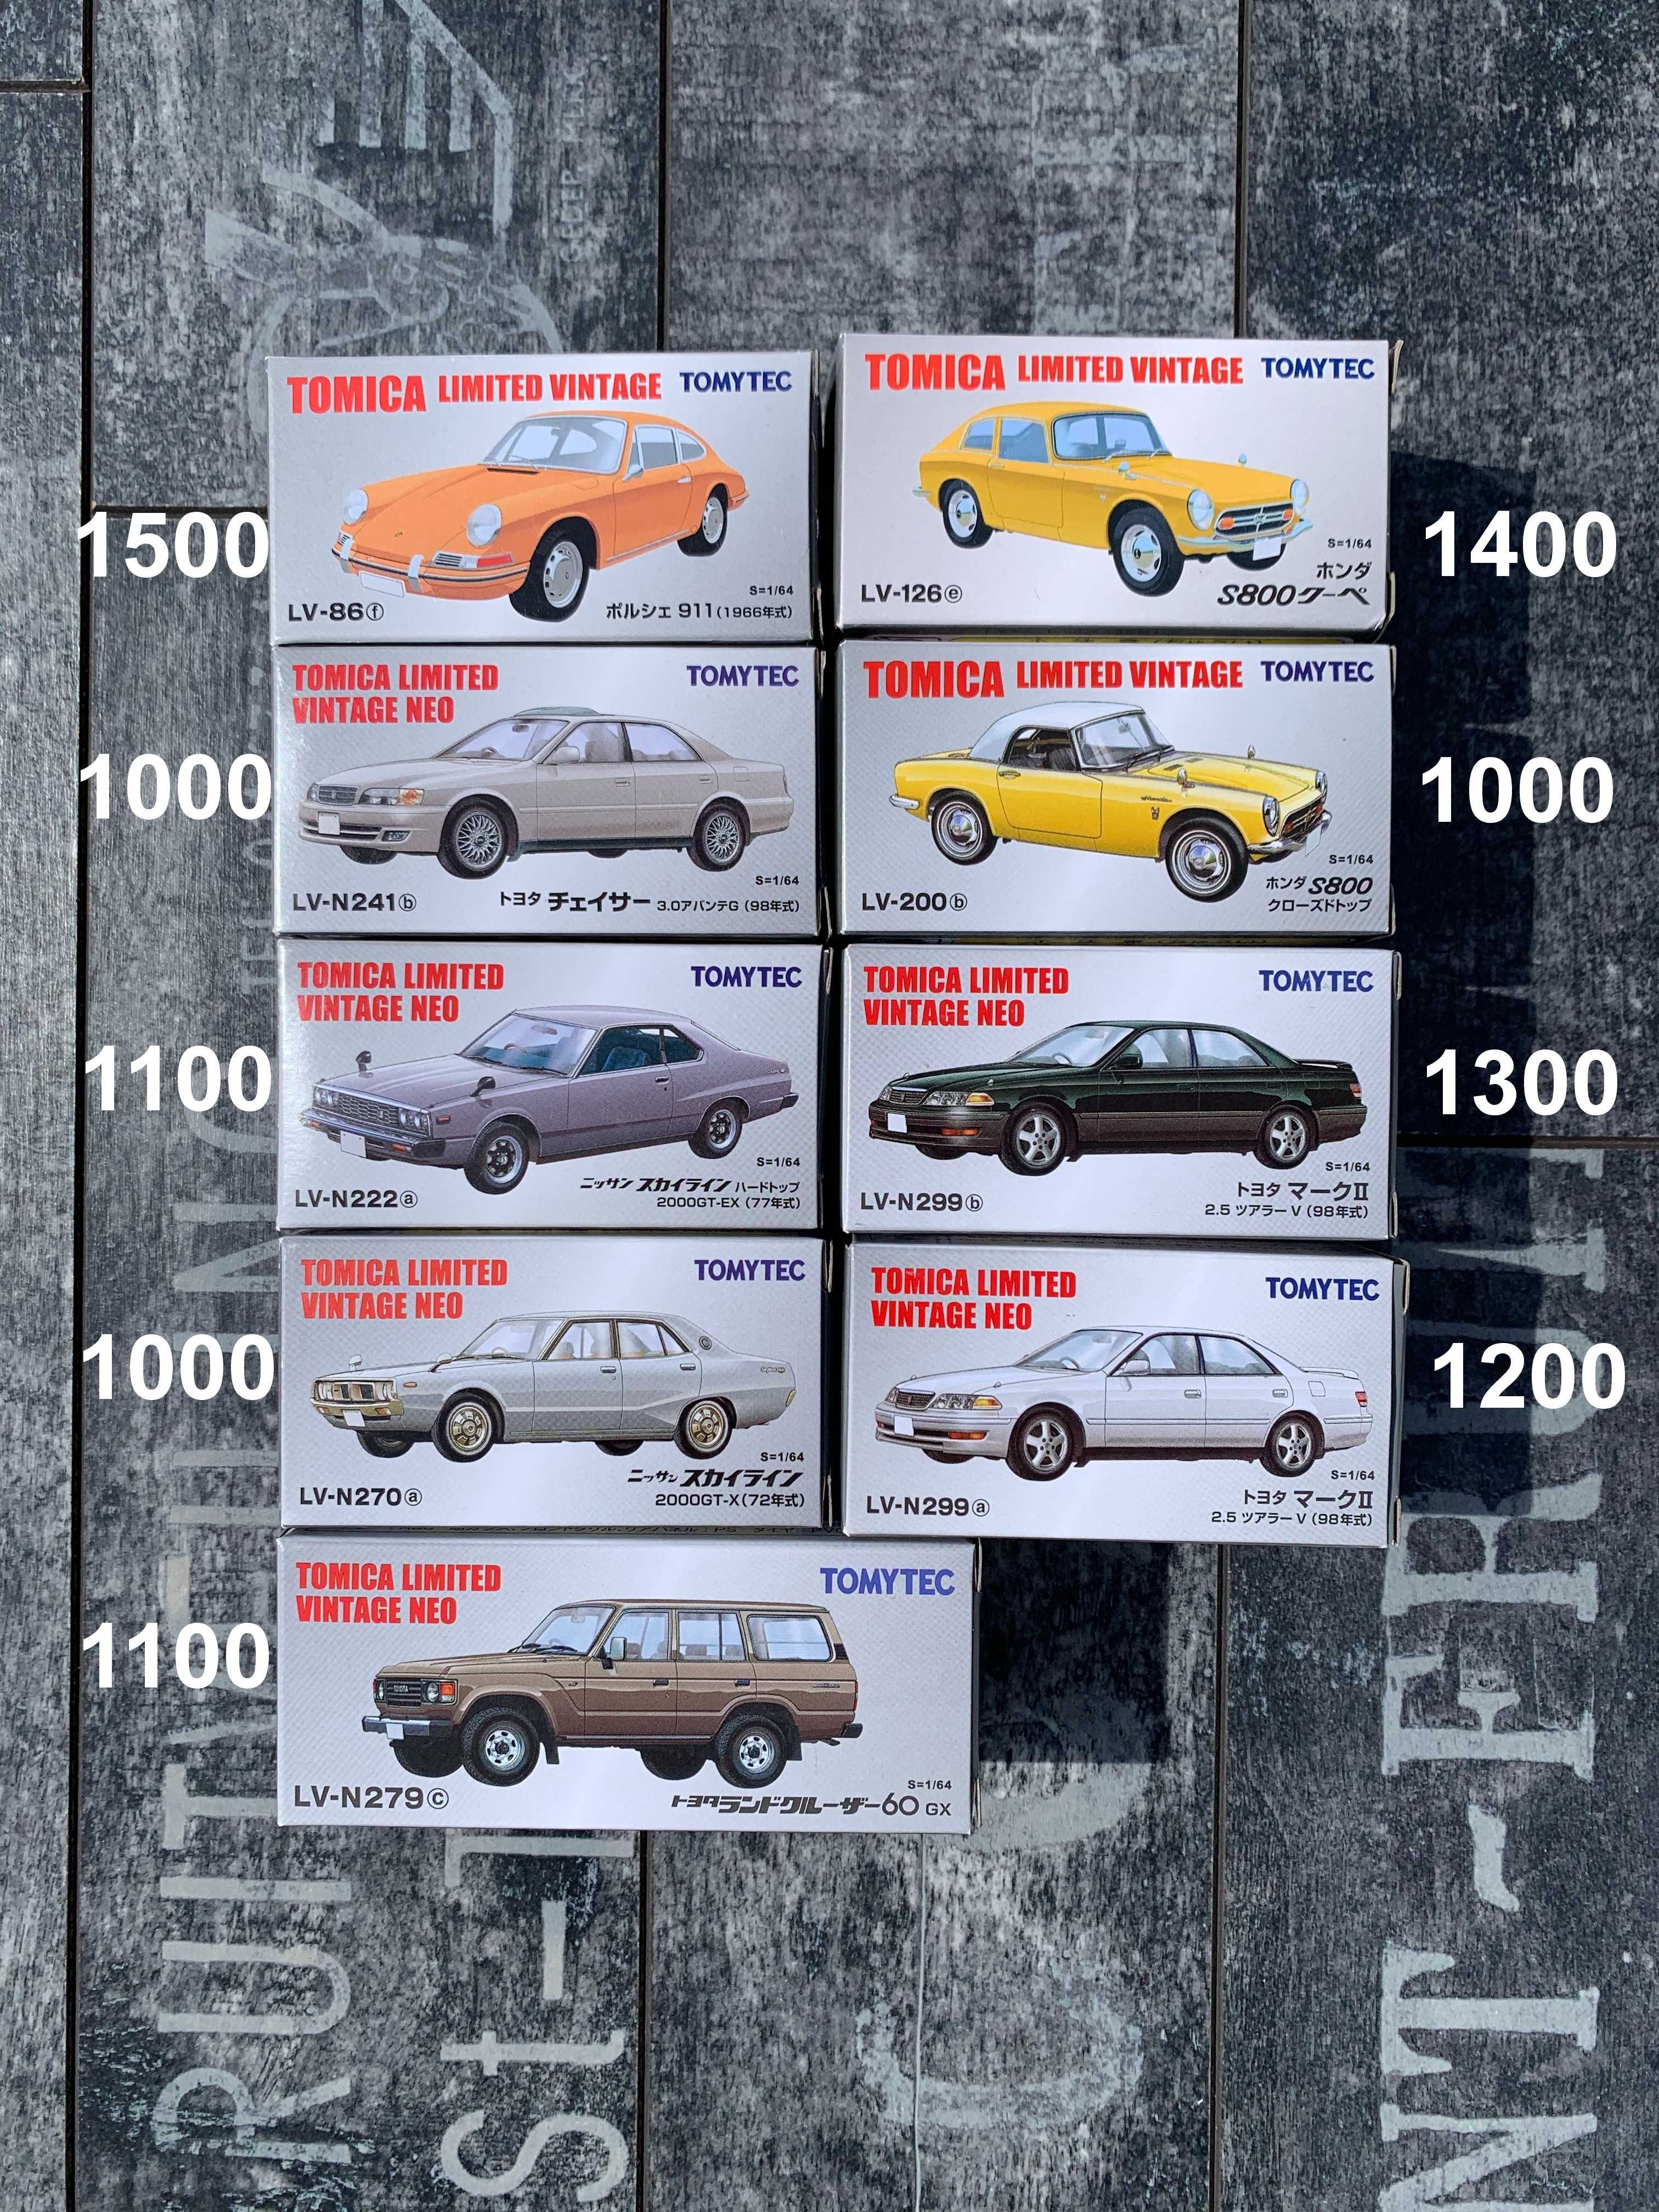 Tomica Limited Vintage Ferrari, Lambo, Nissan, Porsche, Toyota, Honda